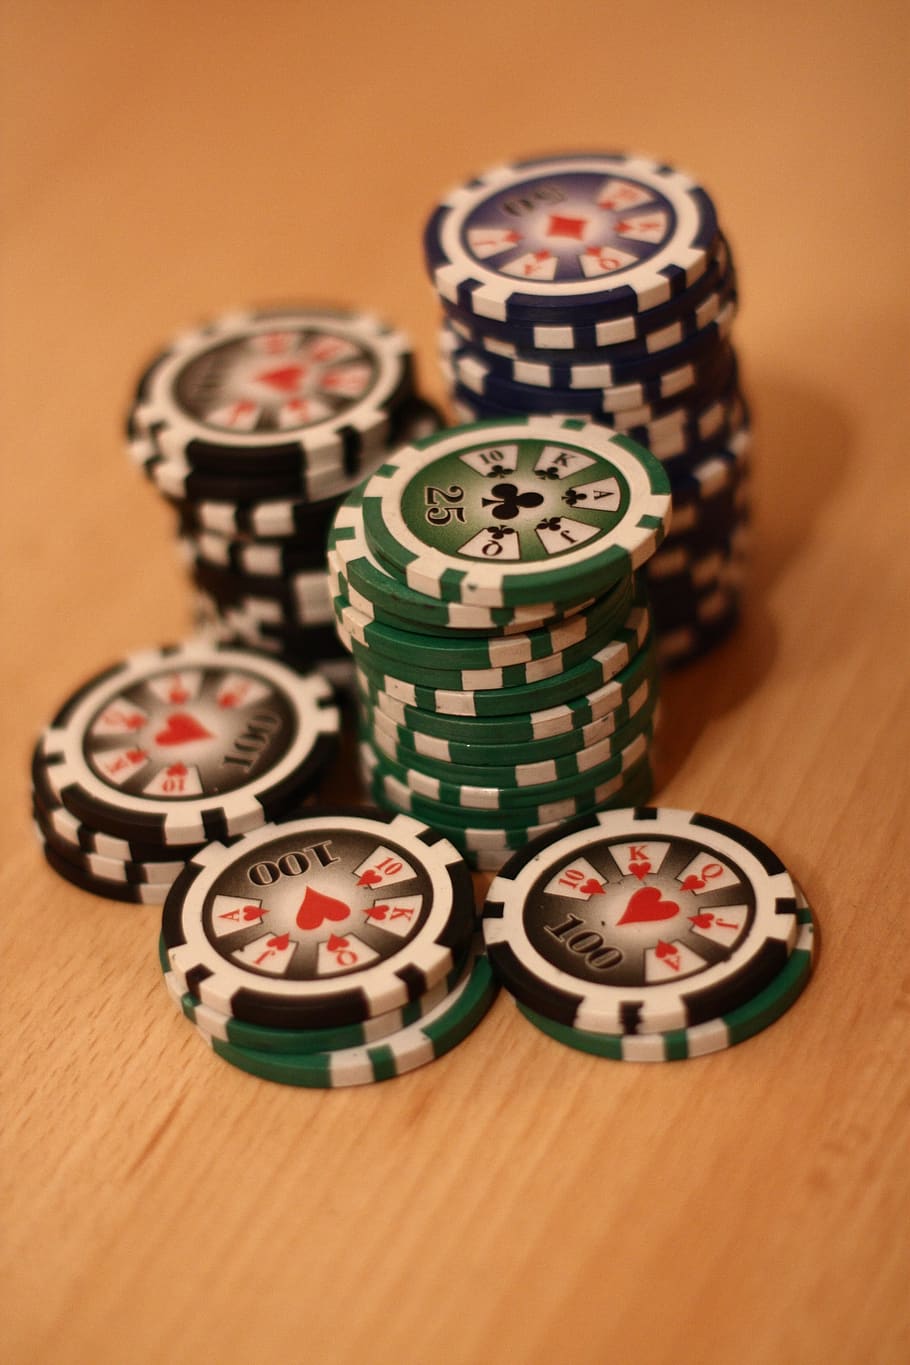 poker, poker chip, play poker, play, gambling, win, casino, card game, risk, profit